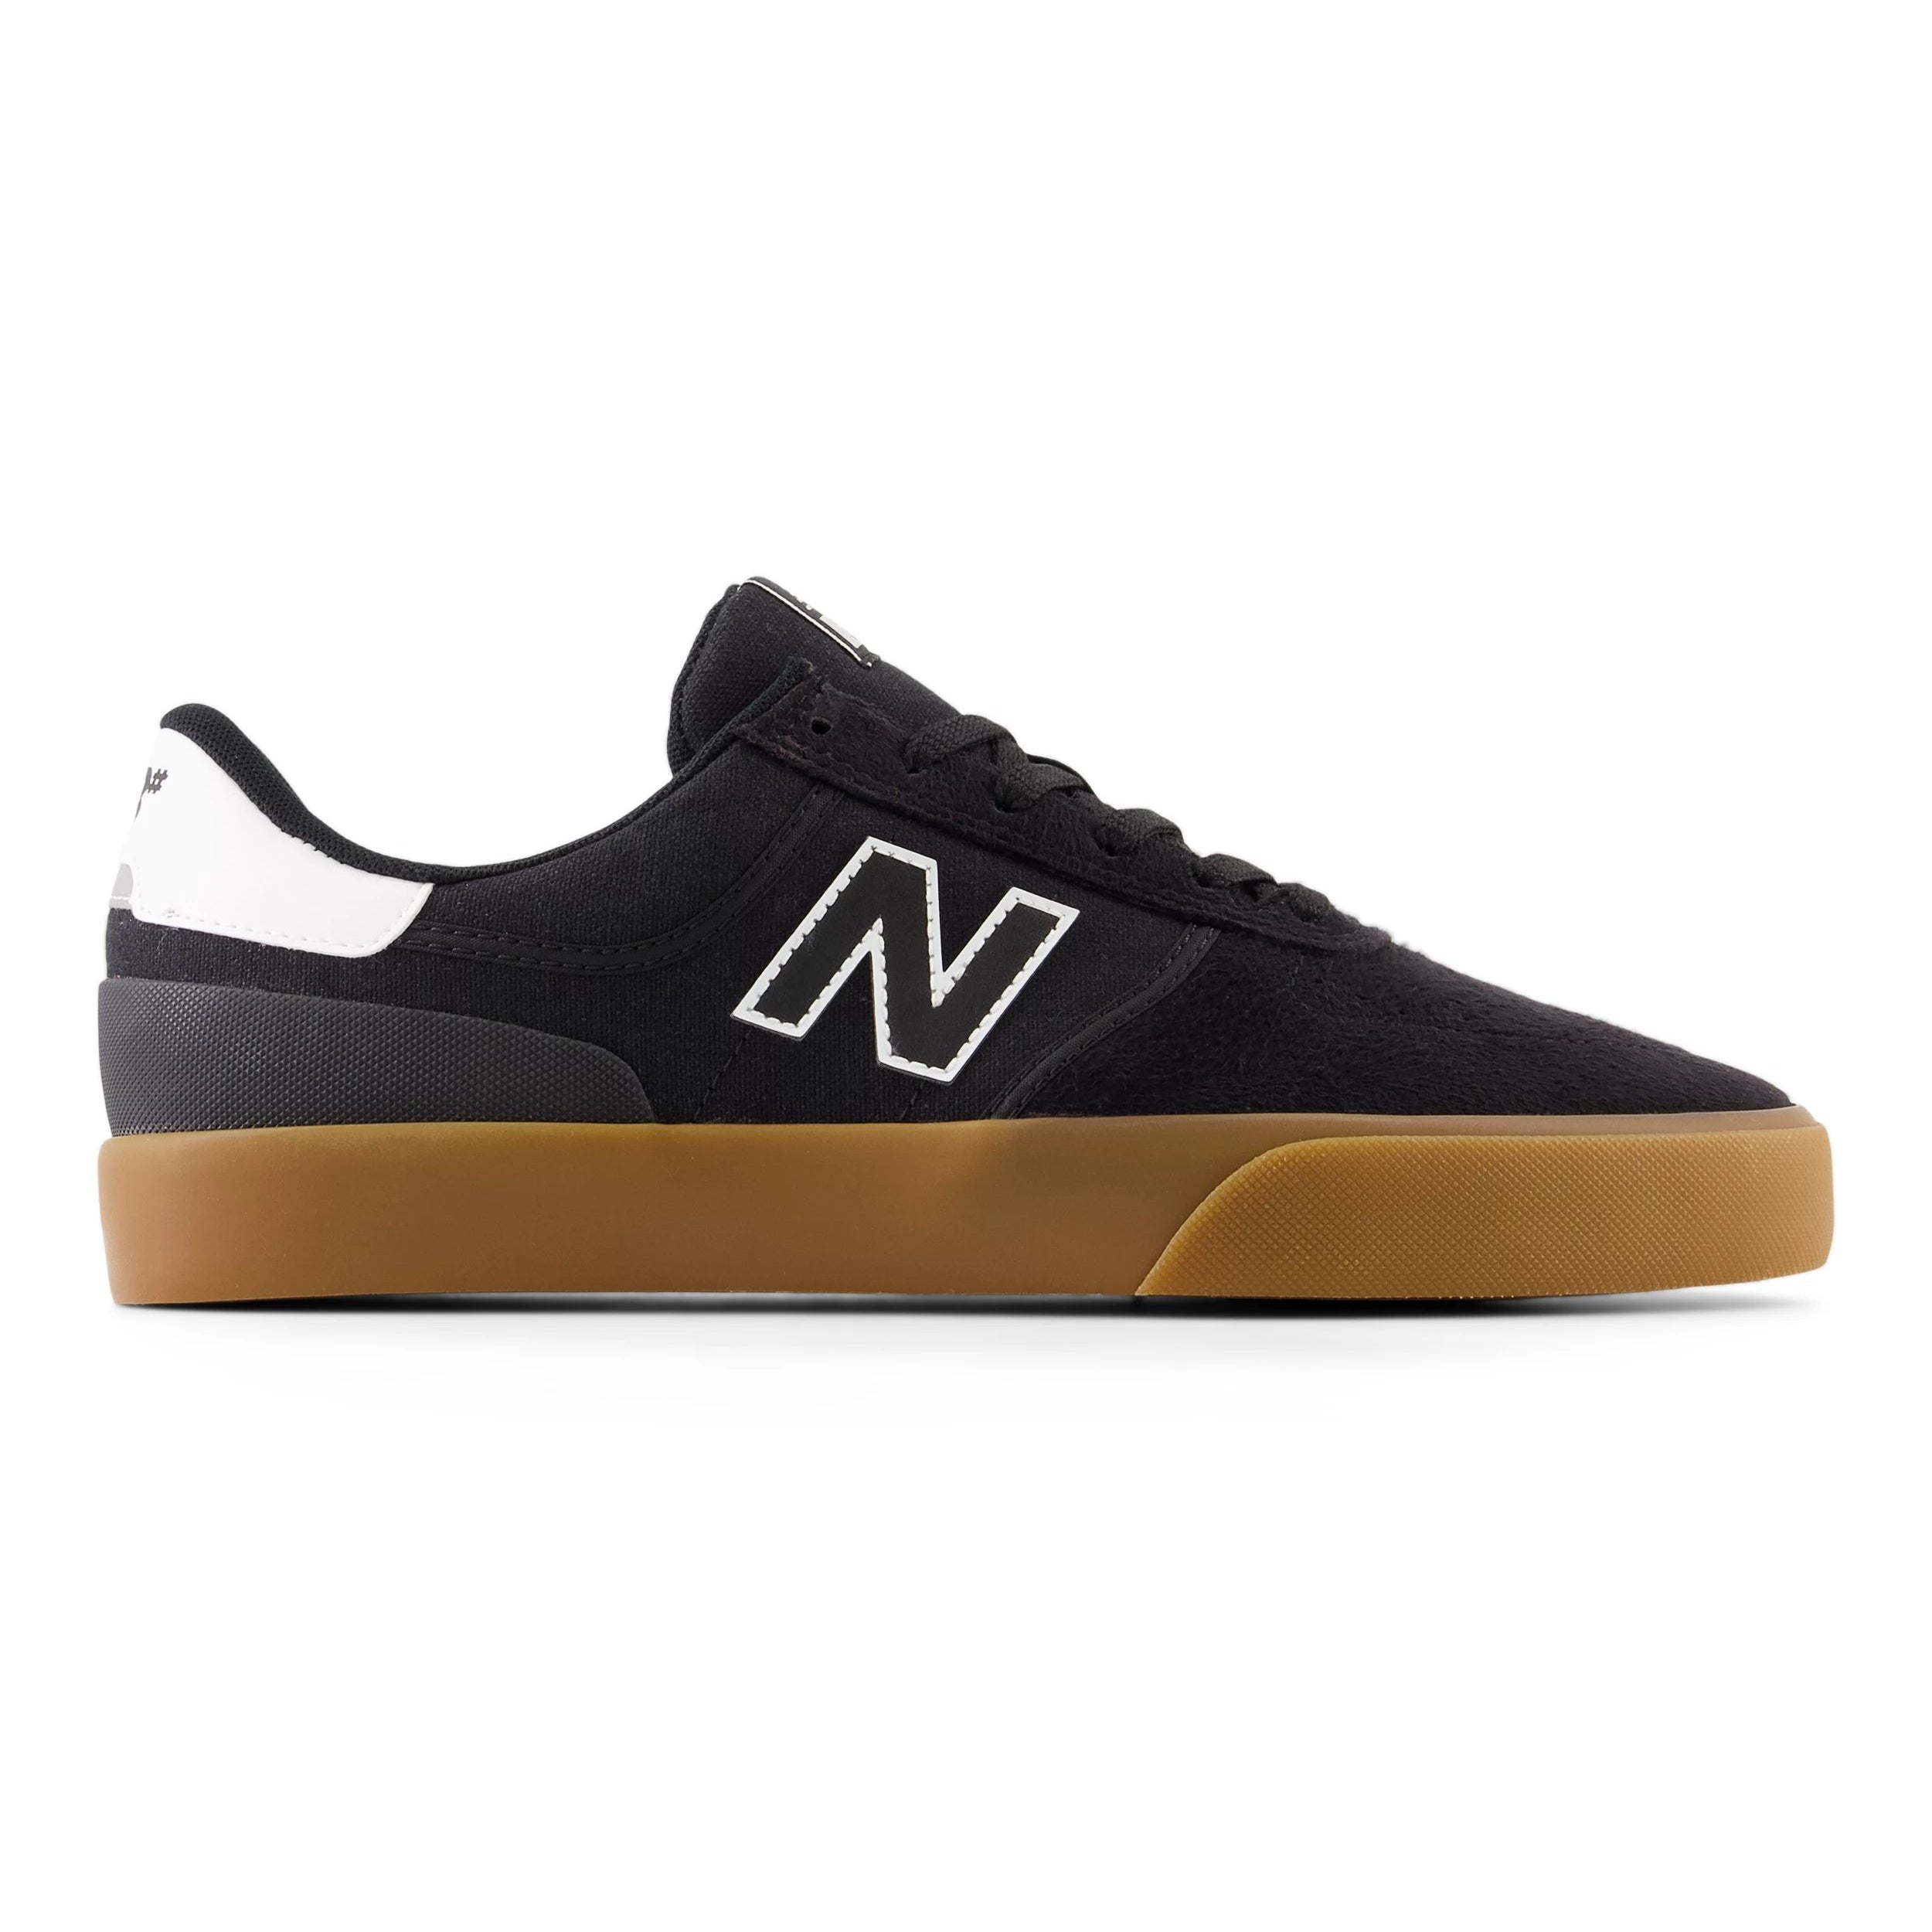 New Balance Numeric 272 Skateboard Shoe - Black/Gum